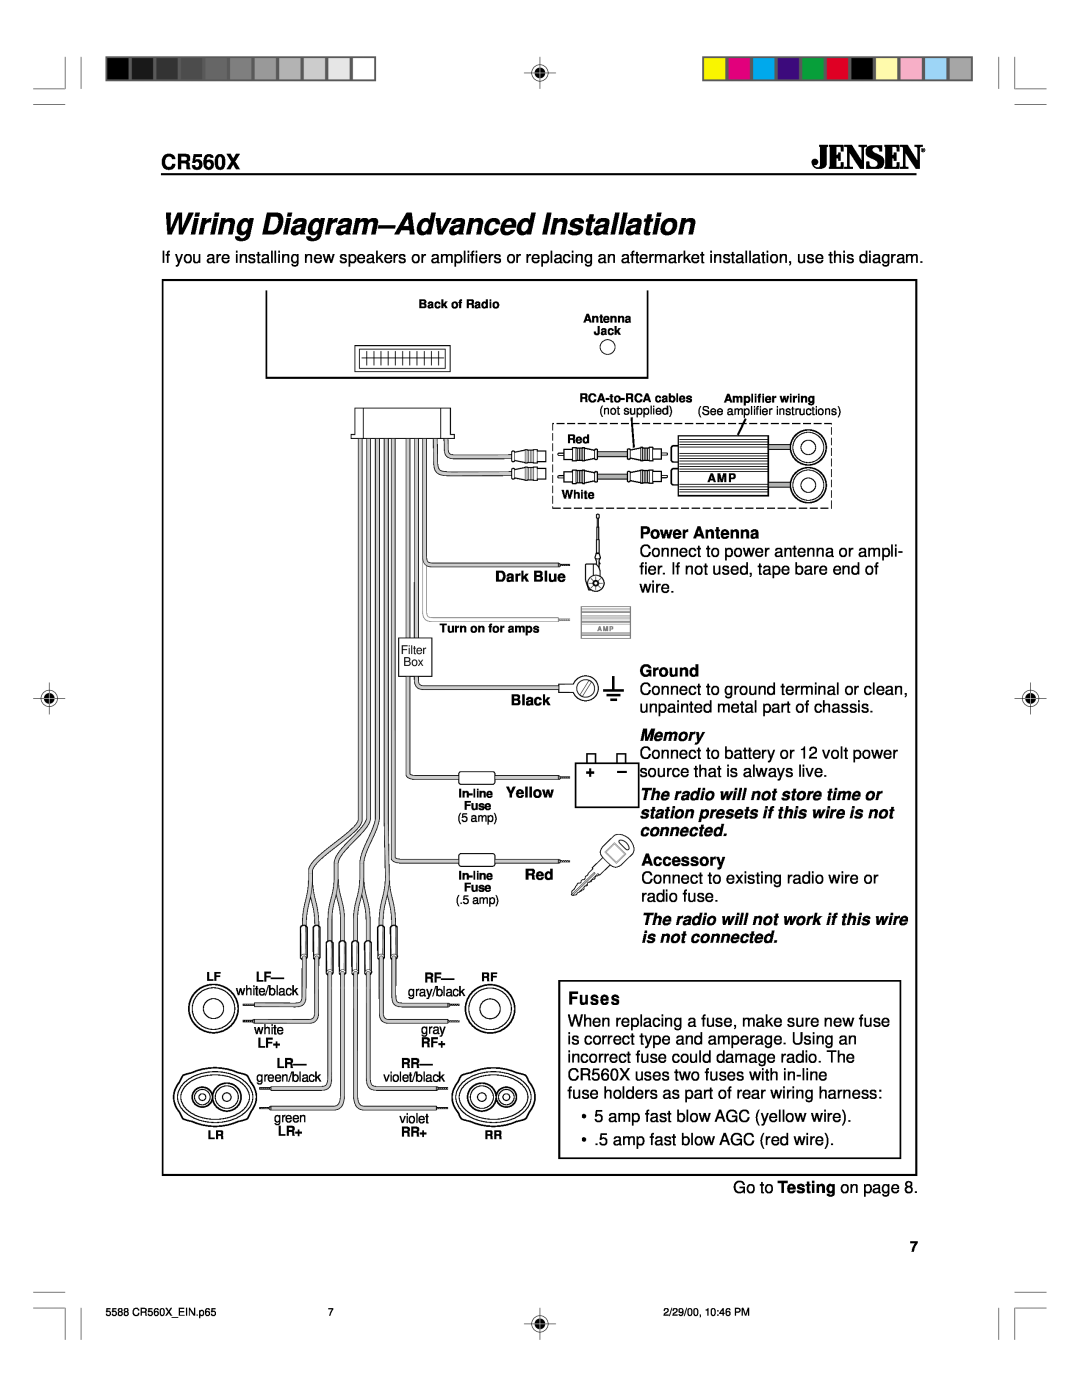 Jensen CR560X specifications Wiring Diagram-AdvancedInstallation, Fuses, Power Antenna, Ground, Accessory 